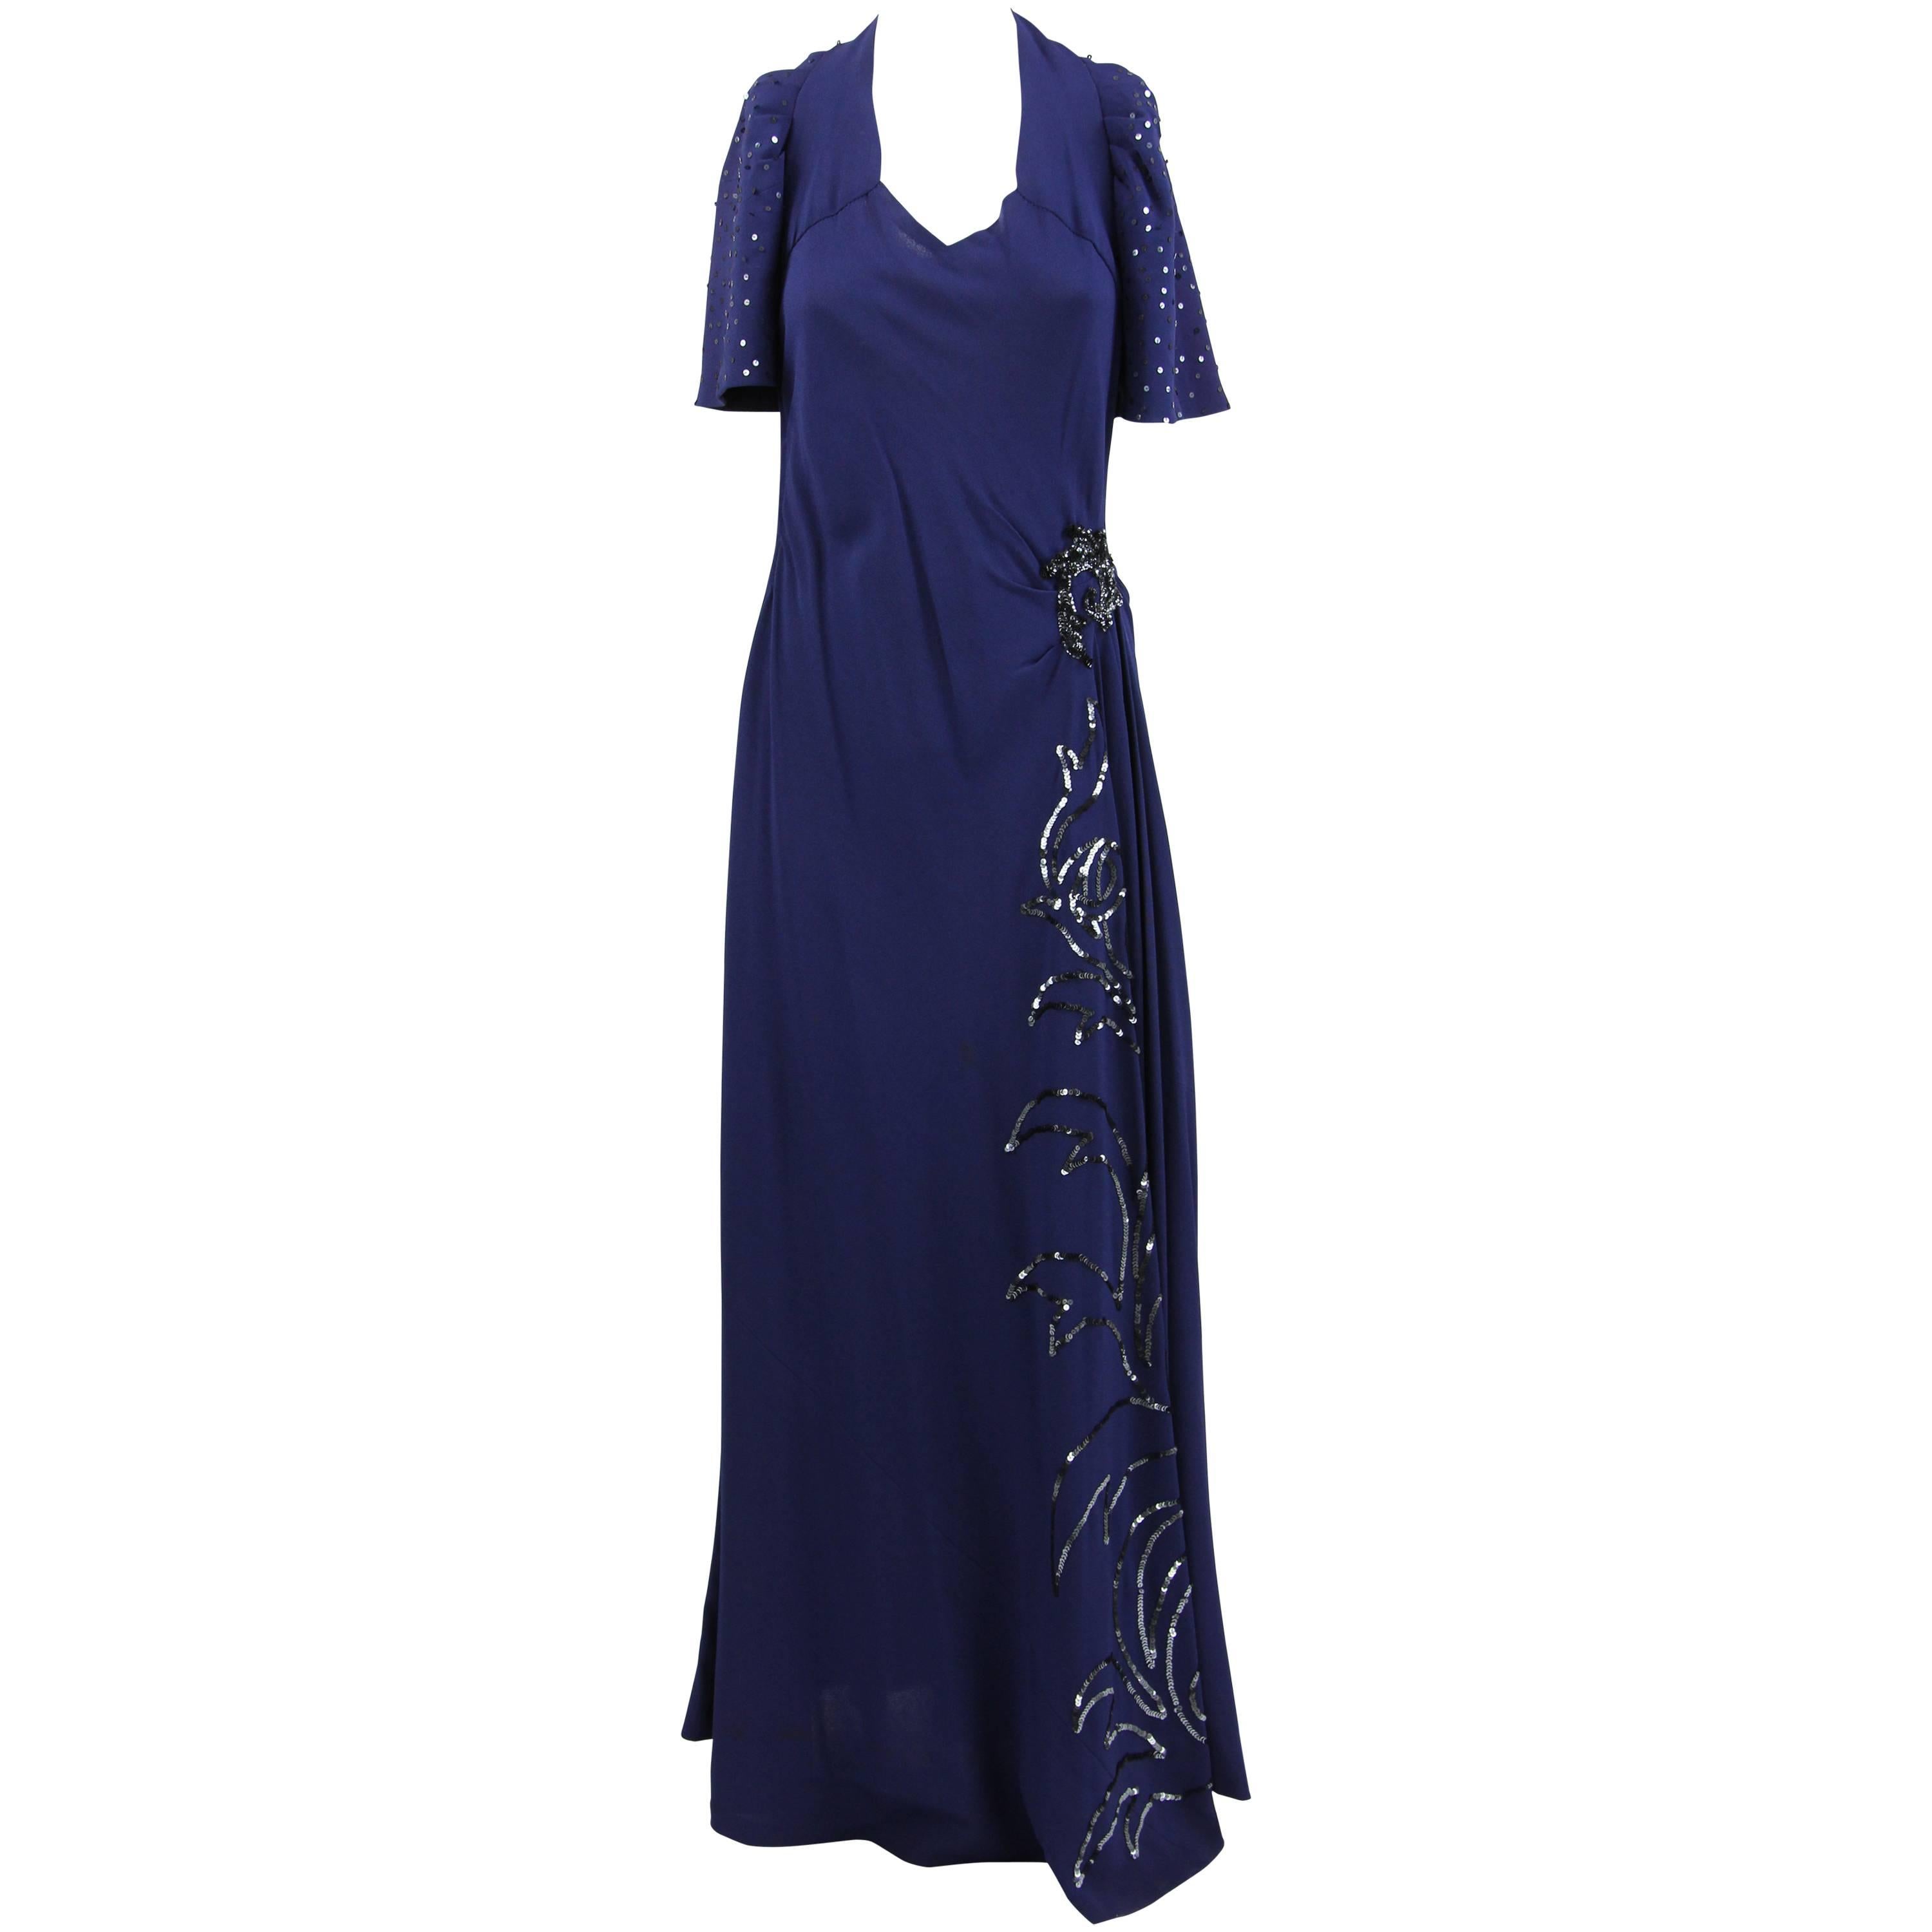 Artisanal Embroidered Dark Blue Evening Dress